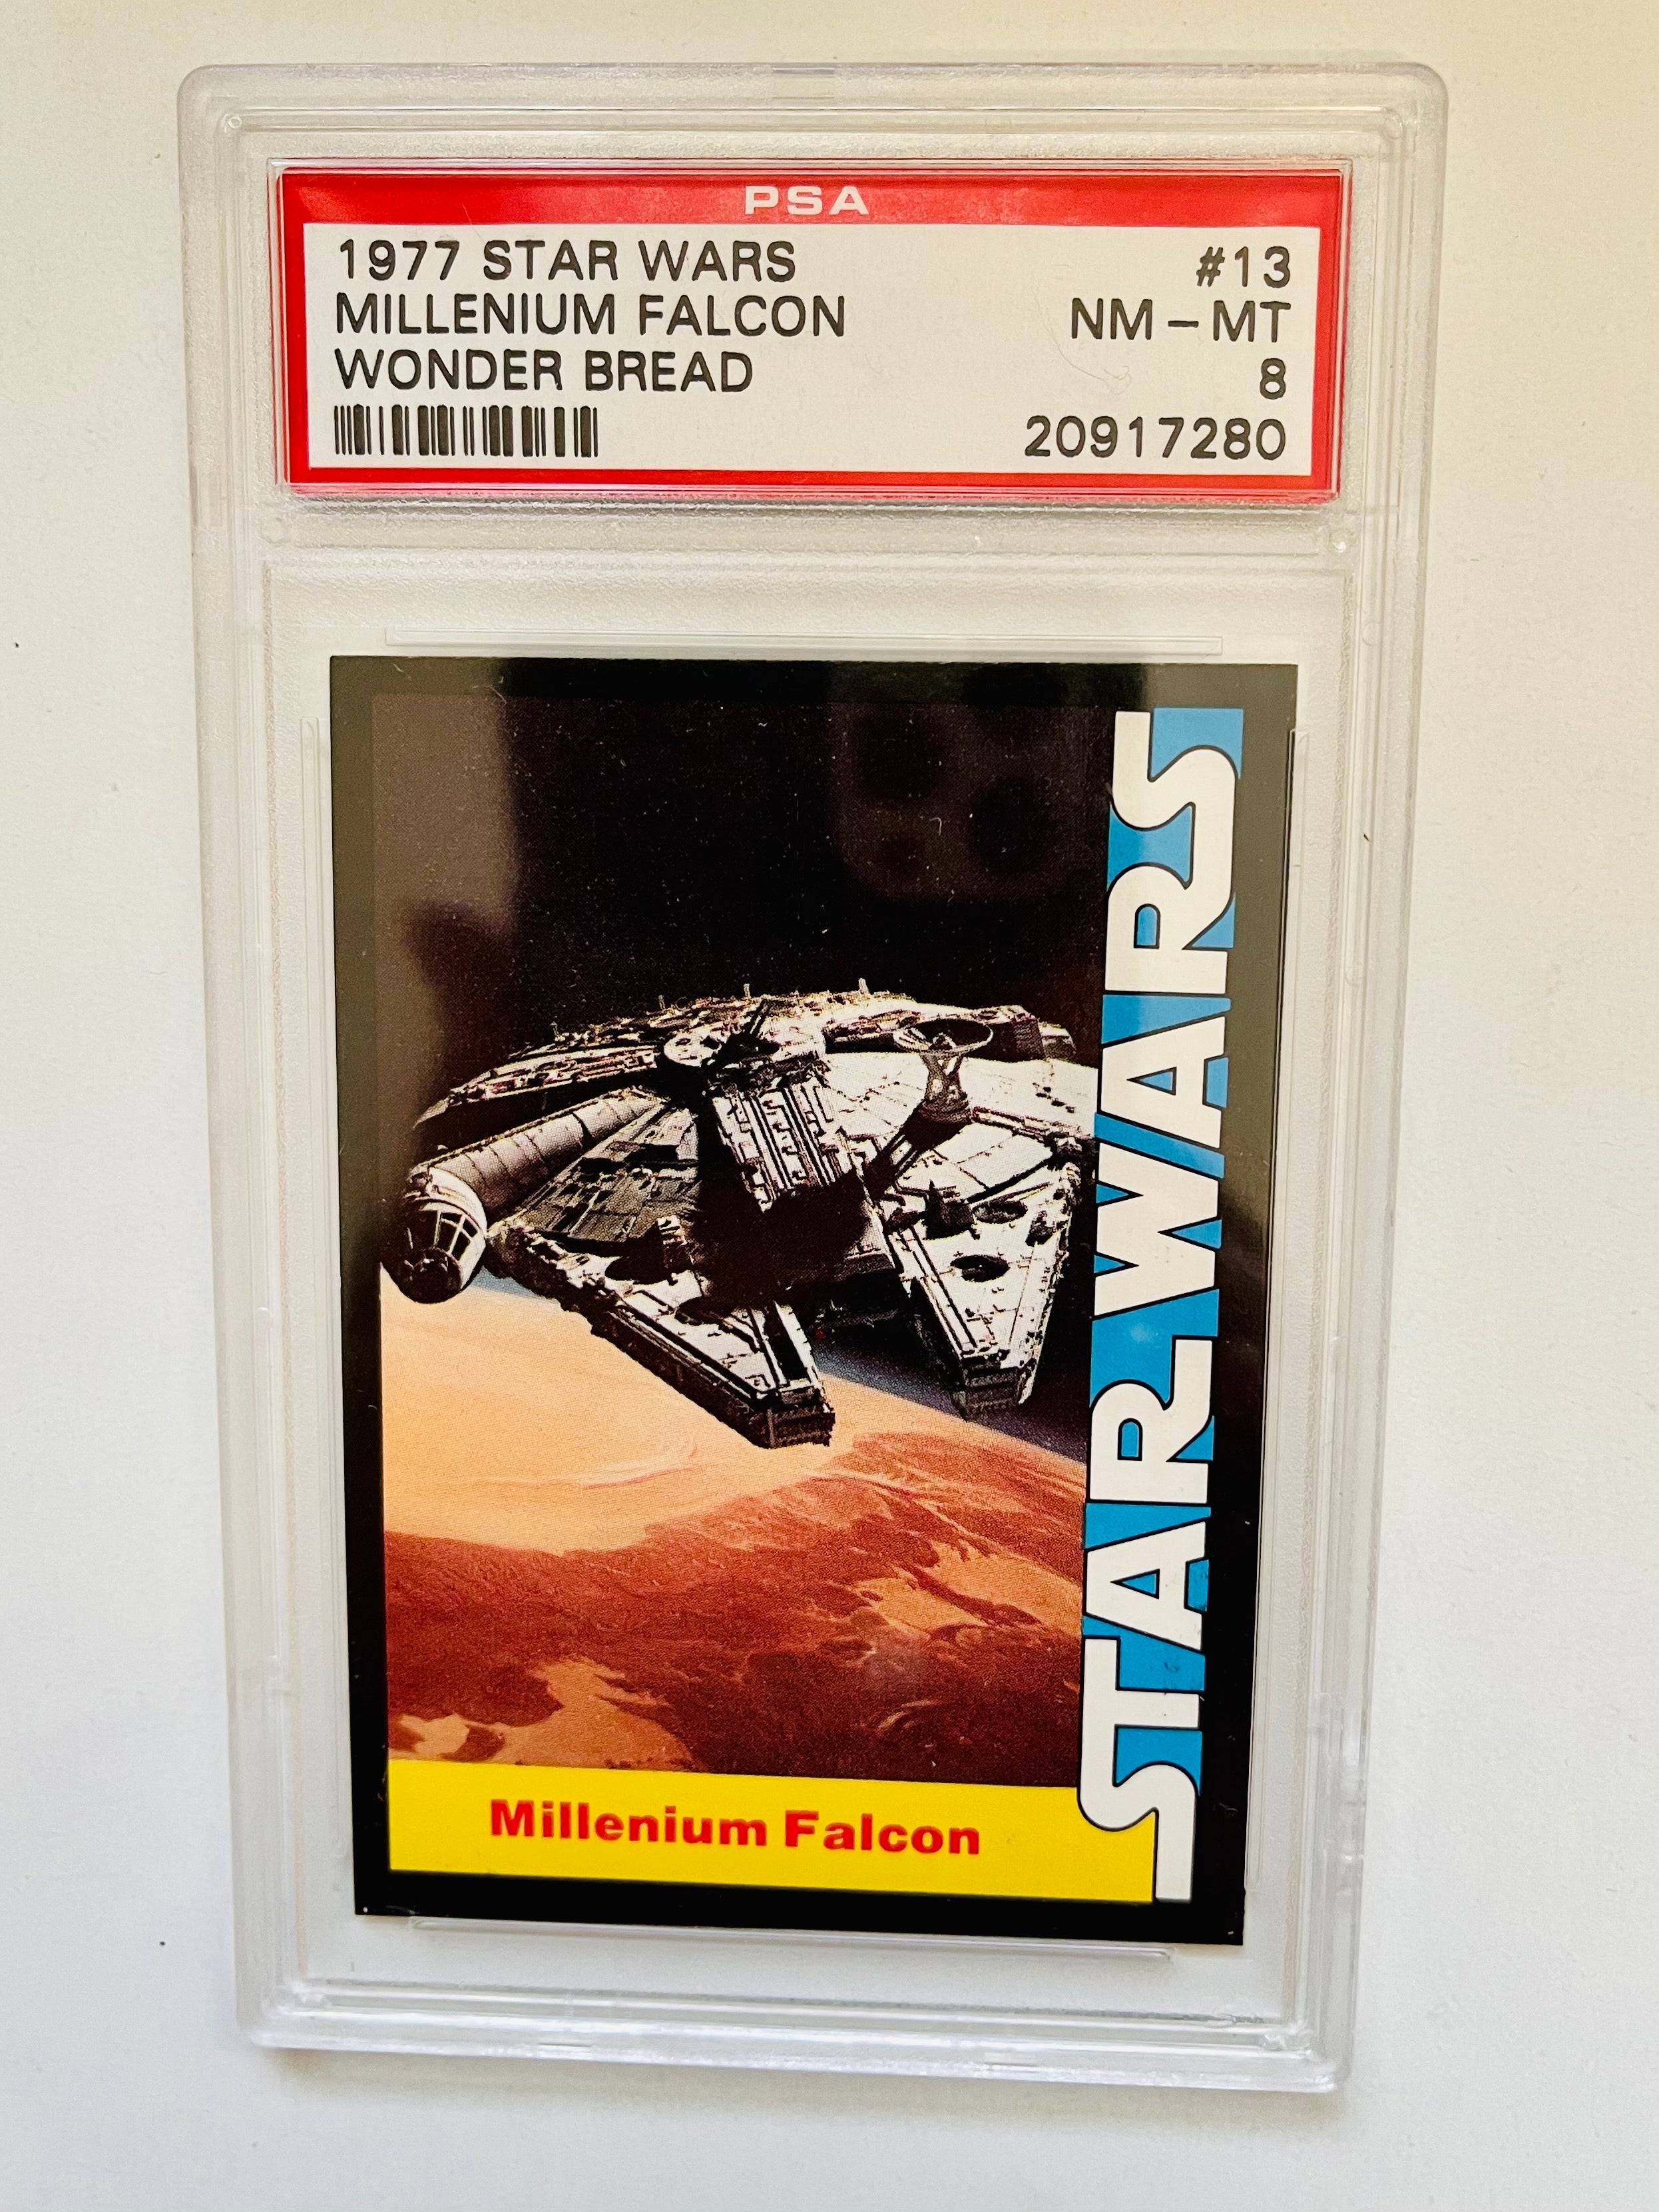 Star Wars Millenium Falcon PSA 8 wonder bread card 1977